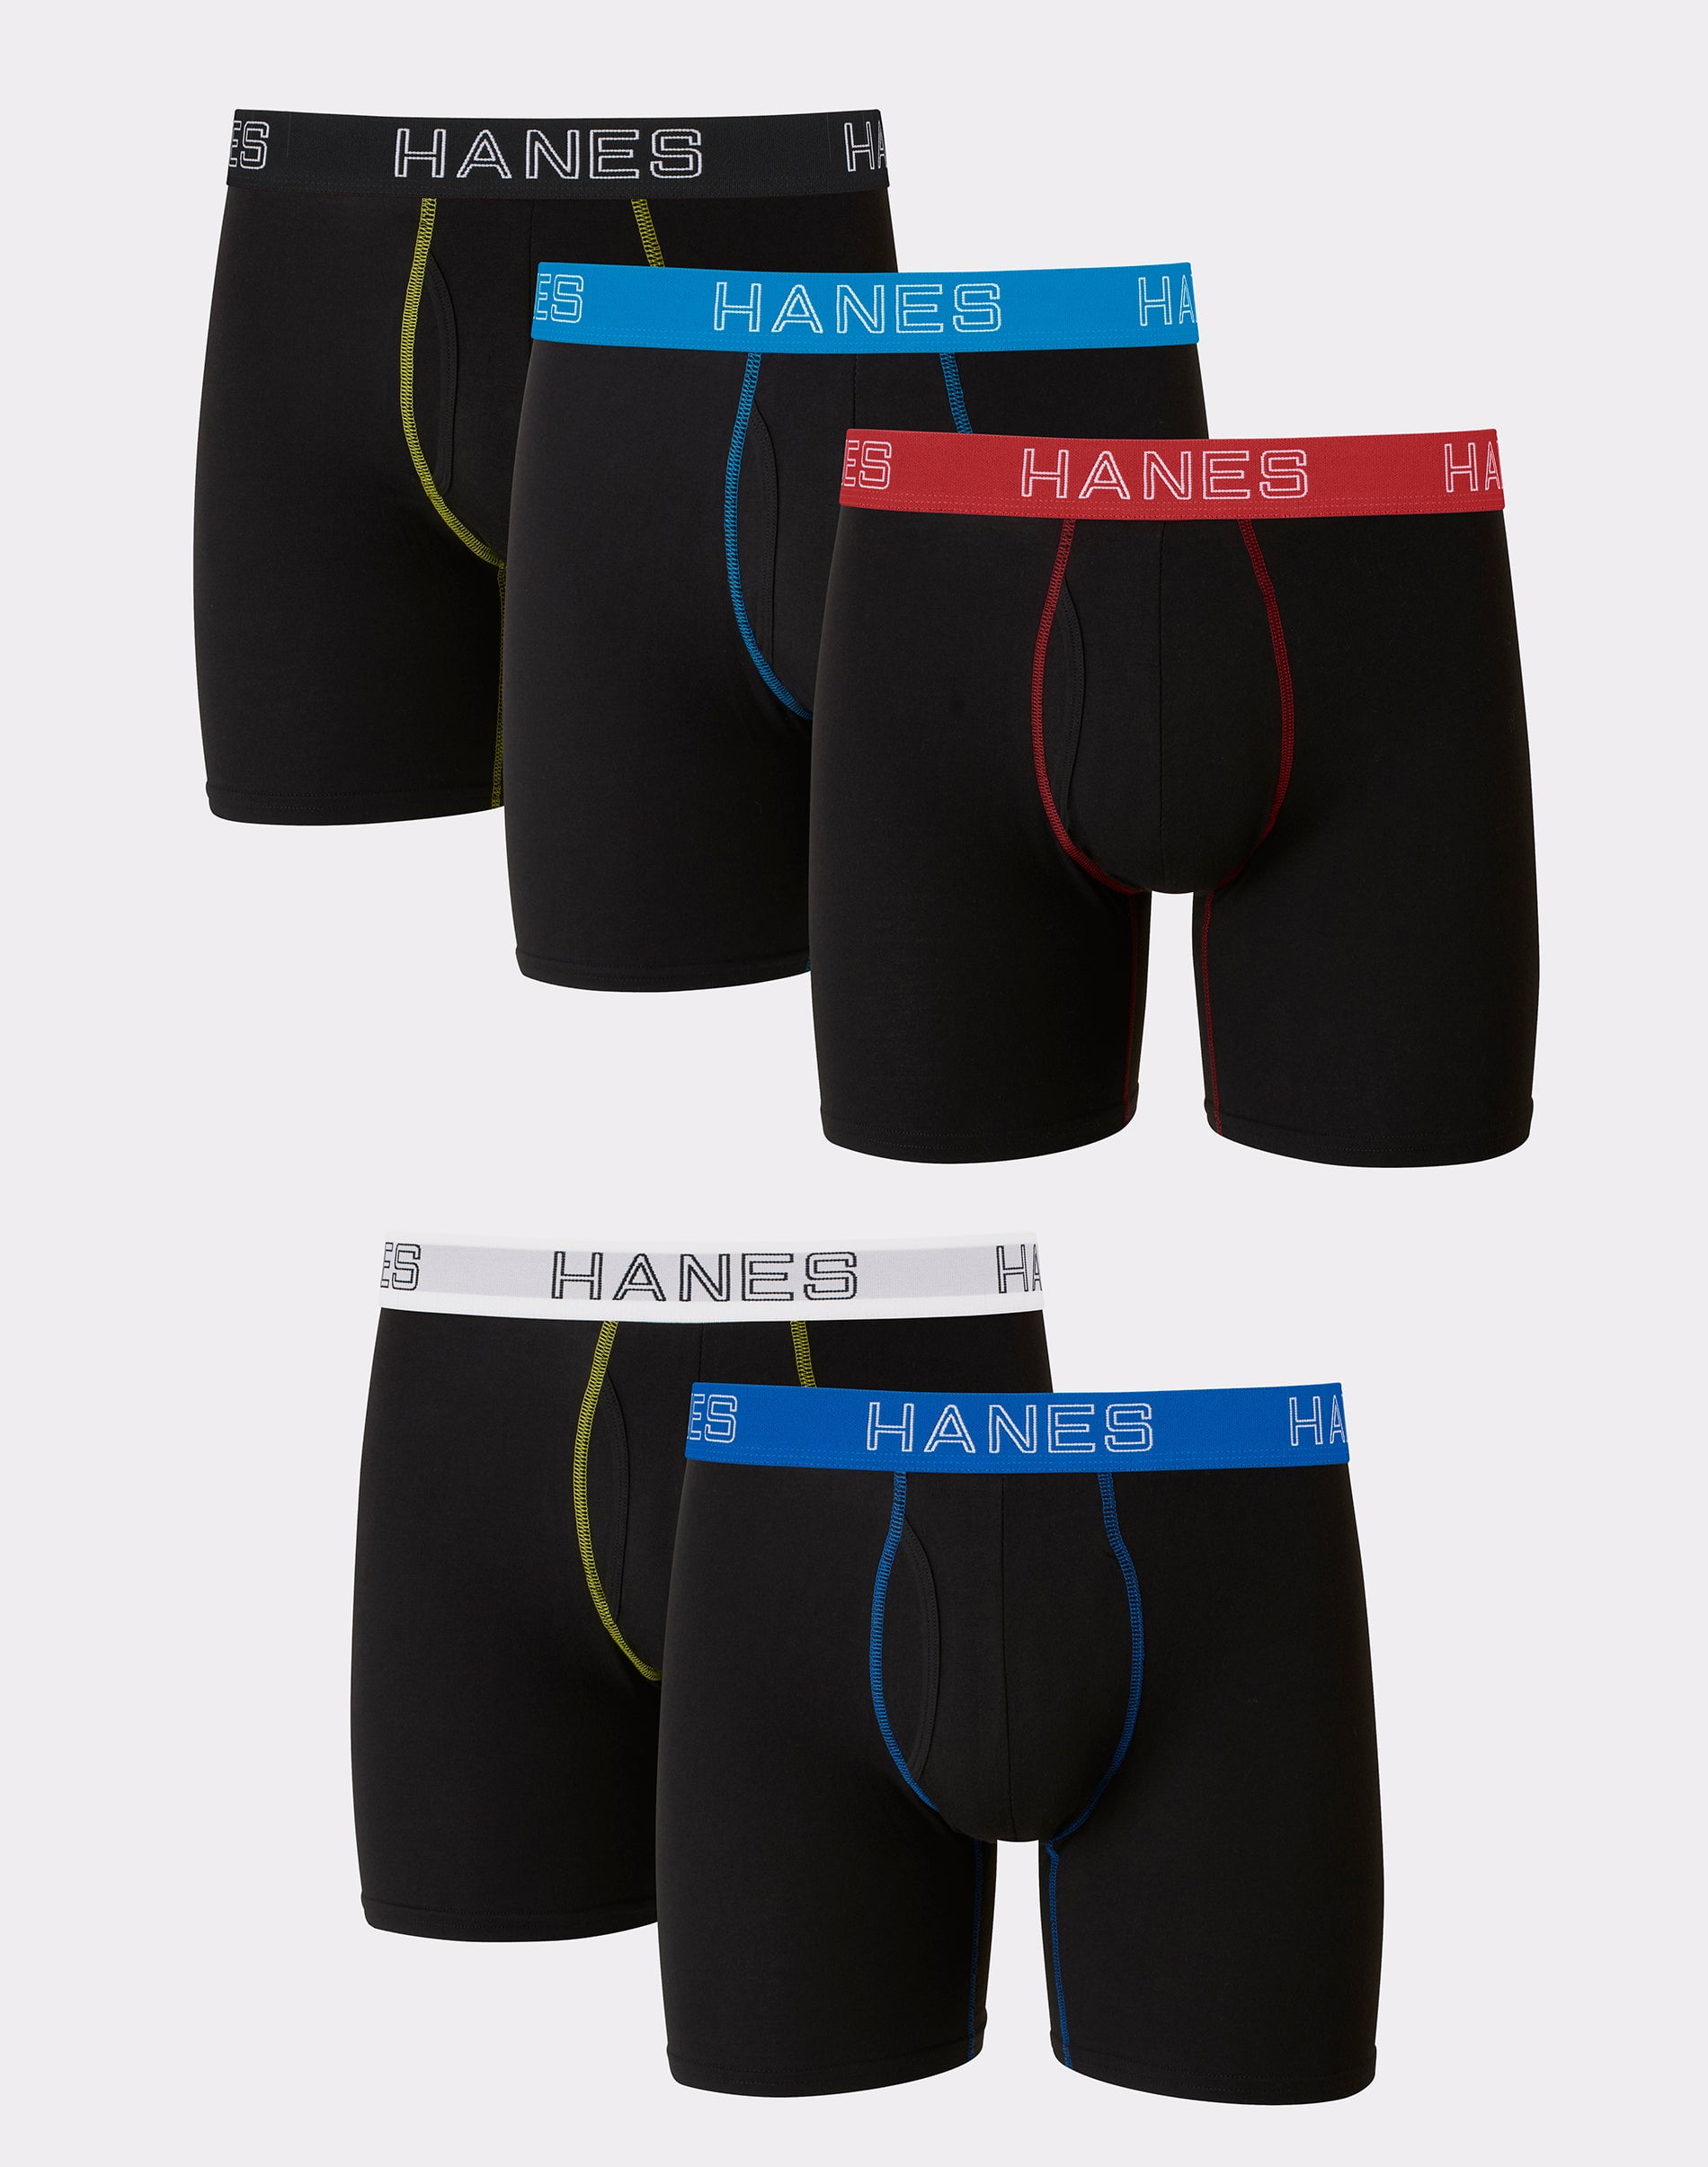 ED HARDY Men's Athletic Underwear, 4-Pack Moisture Wicking